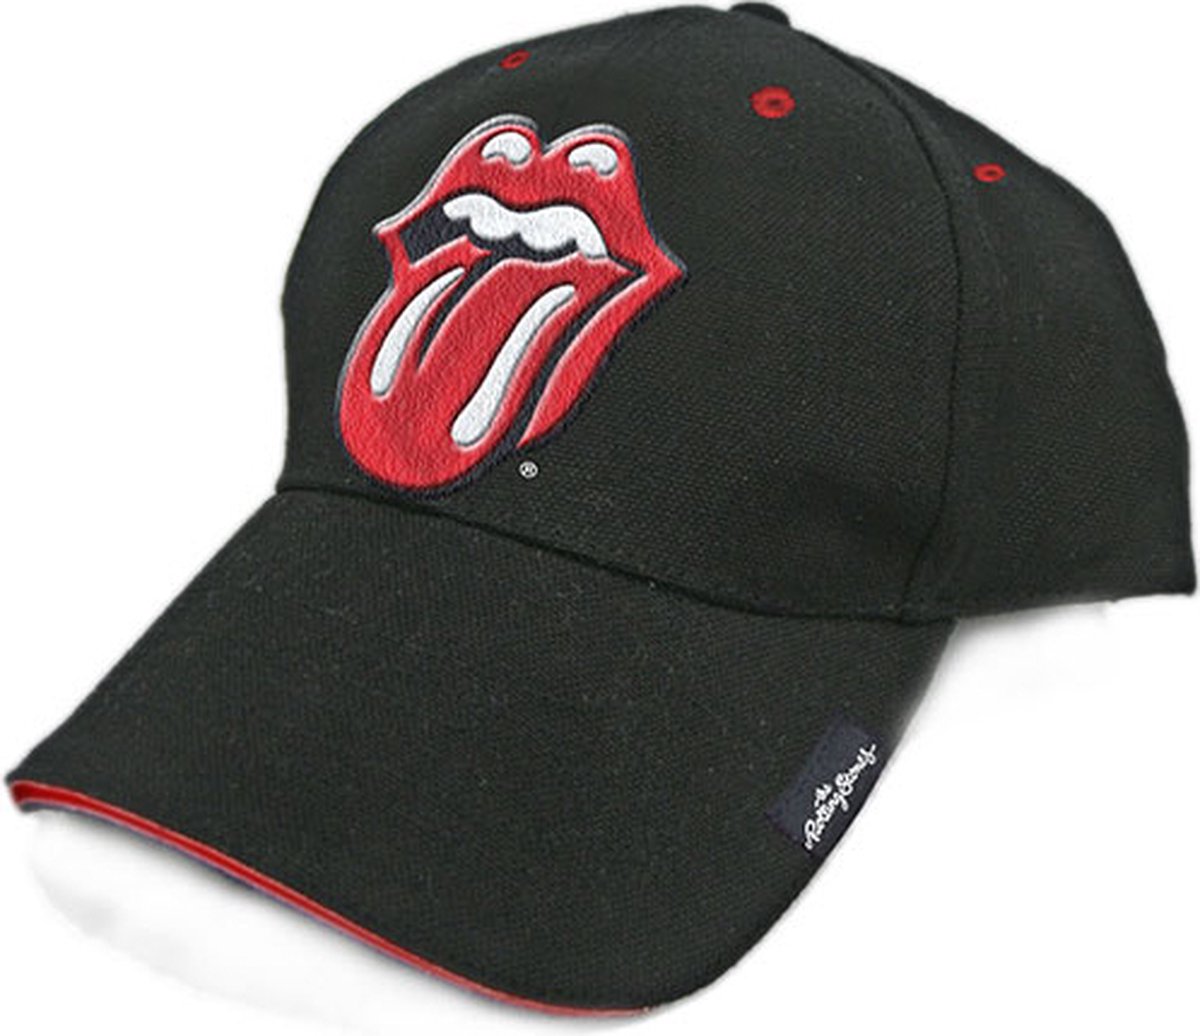 Rolling Stones Baseball Cap – Classic Tongue